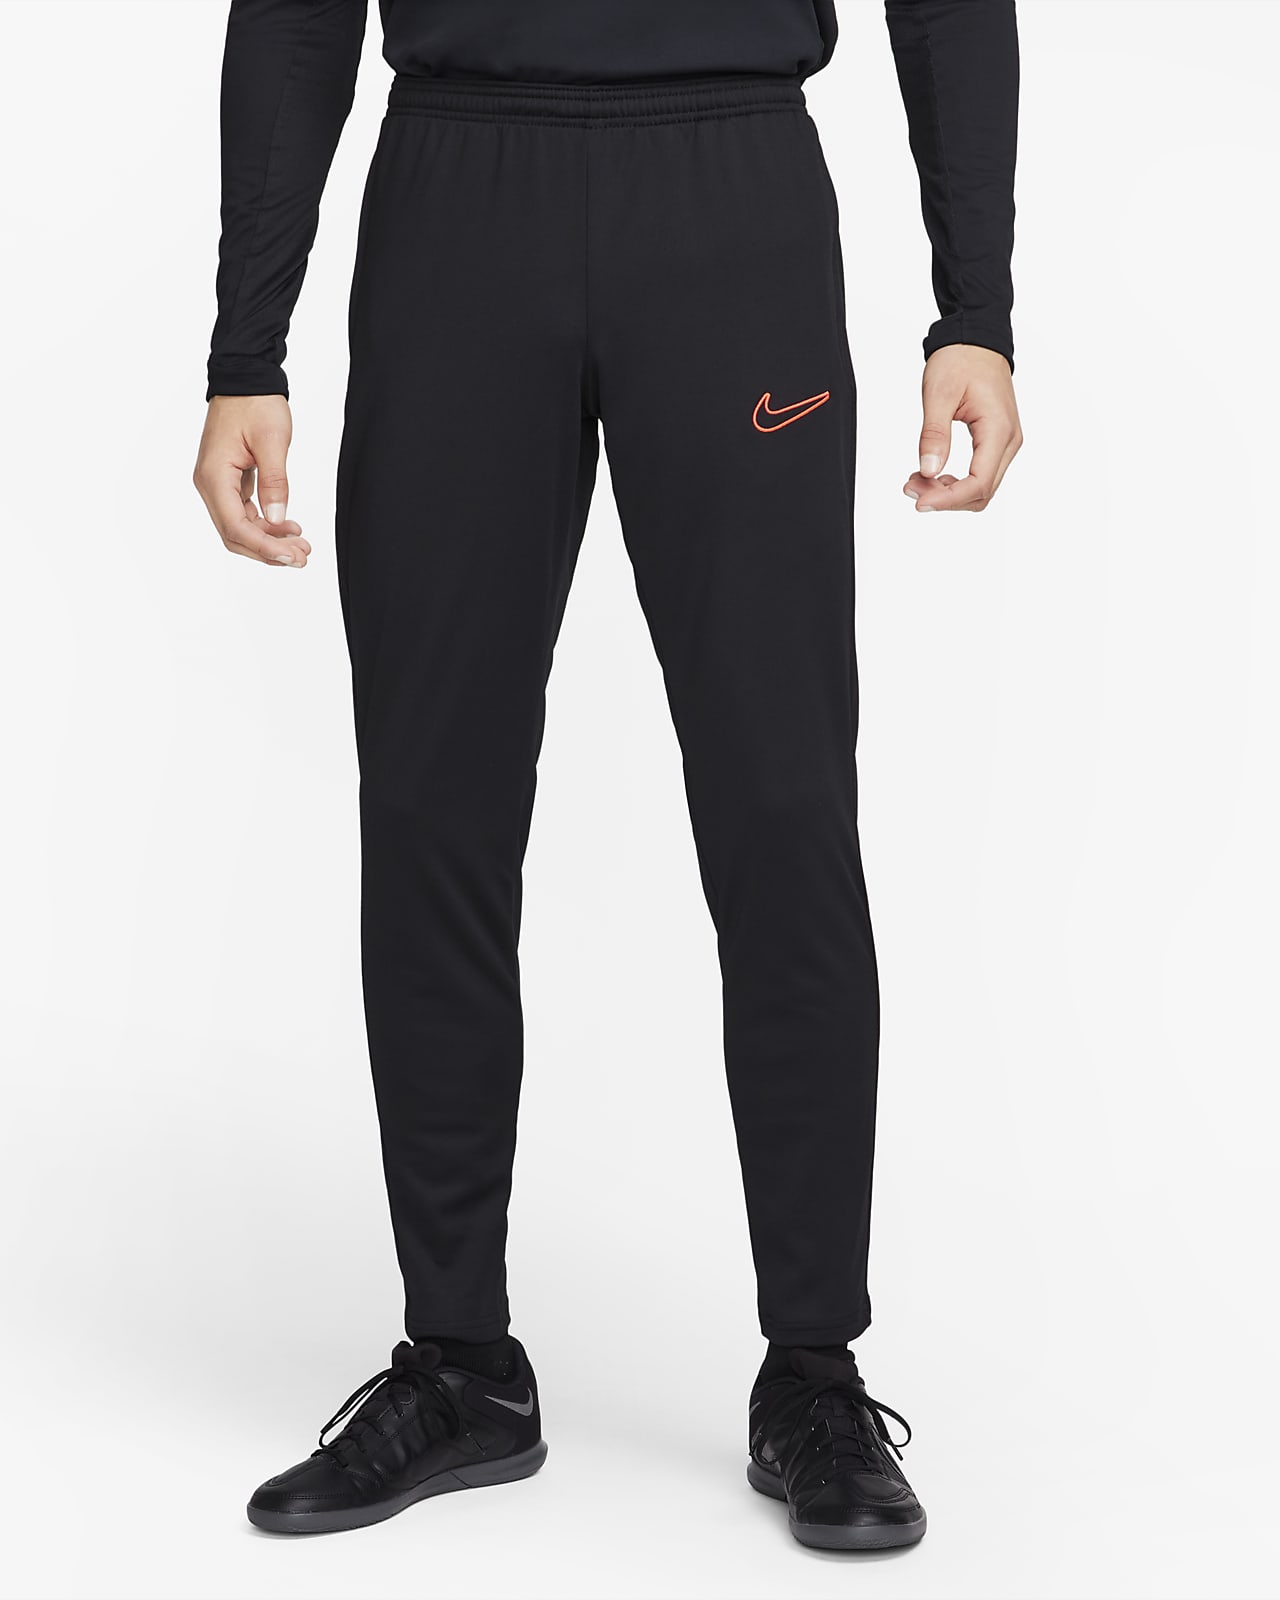 Nike Tuned Ventilated Track Pants  3033 Waist  Holsales